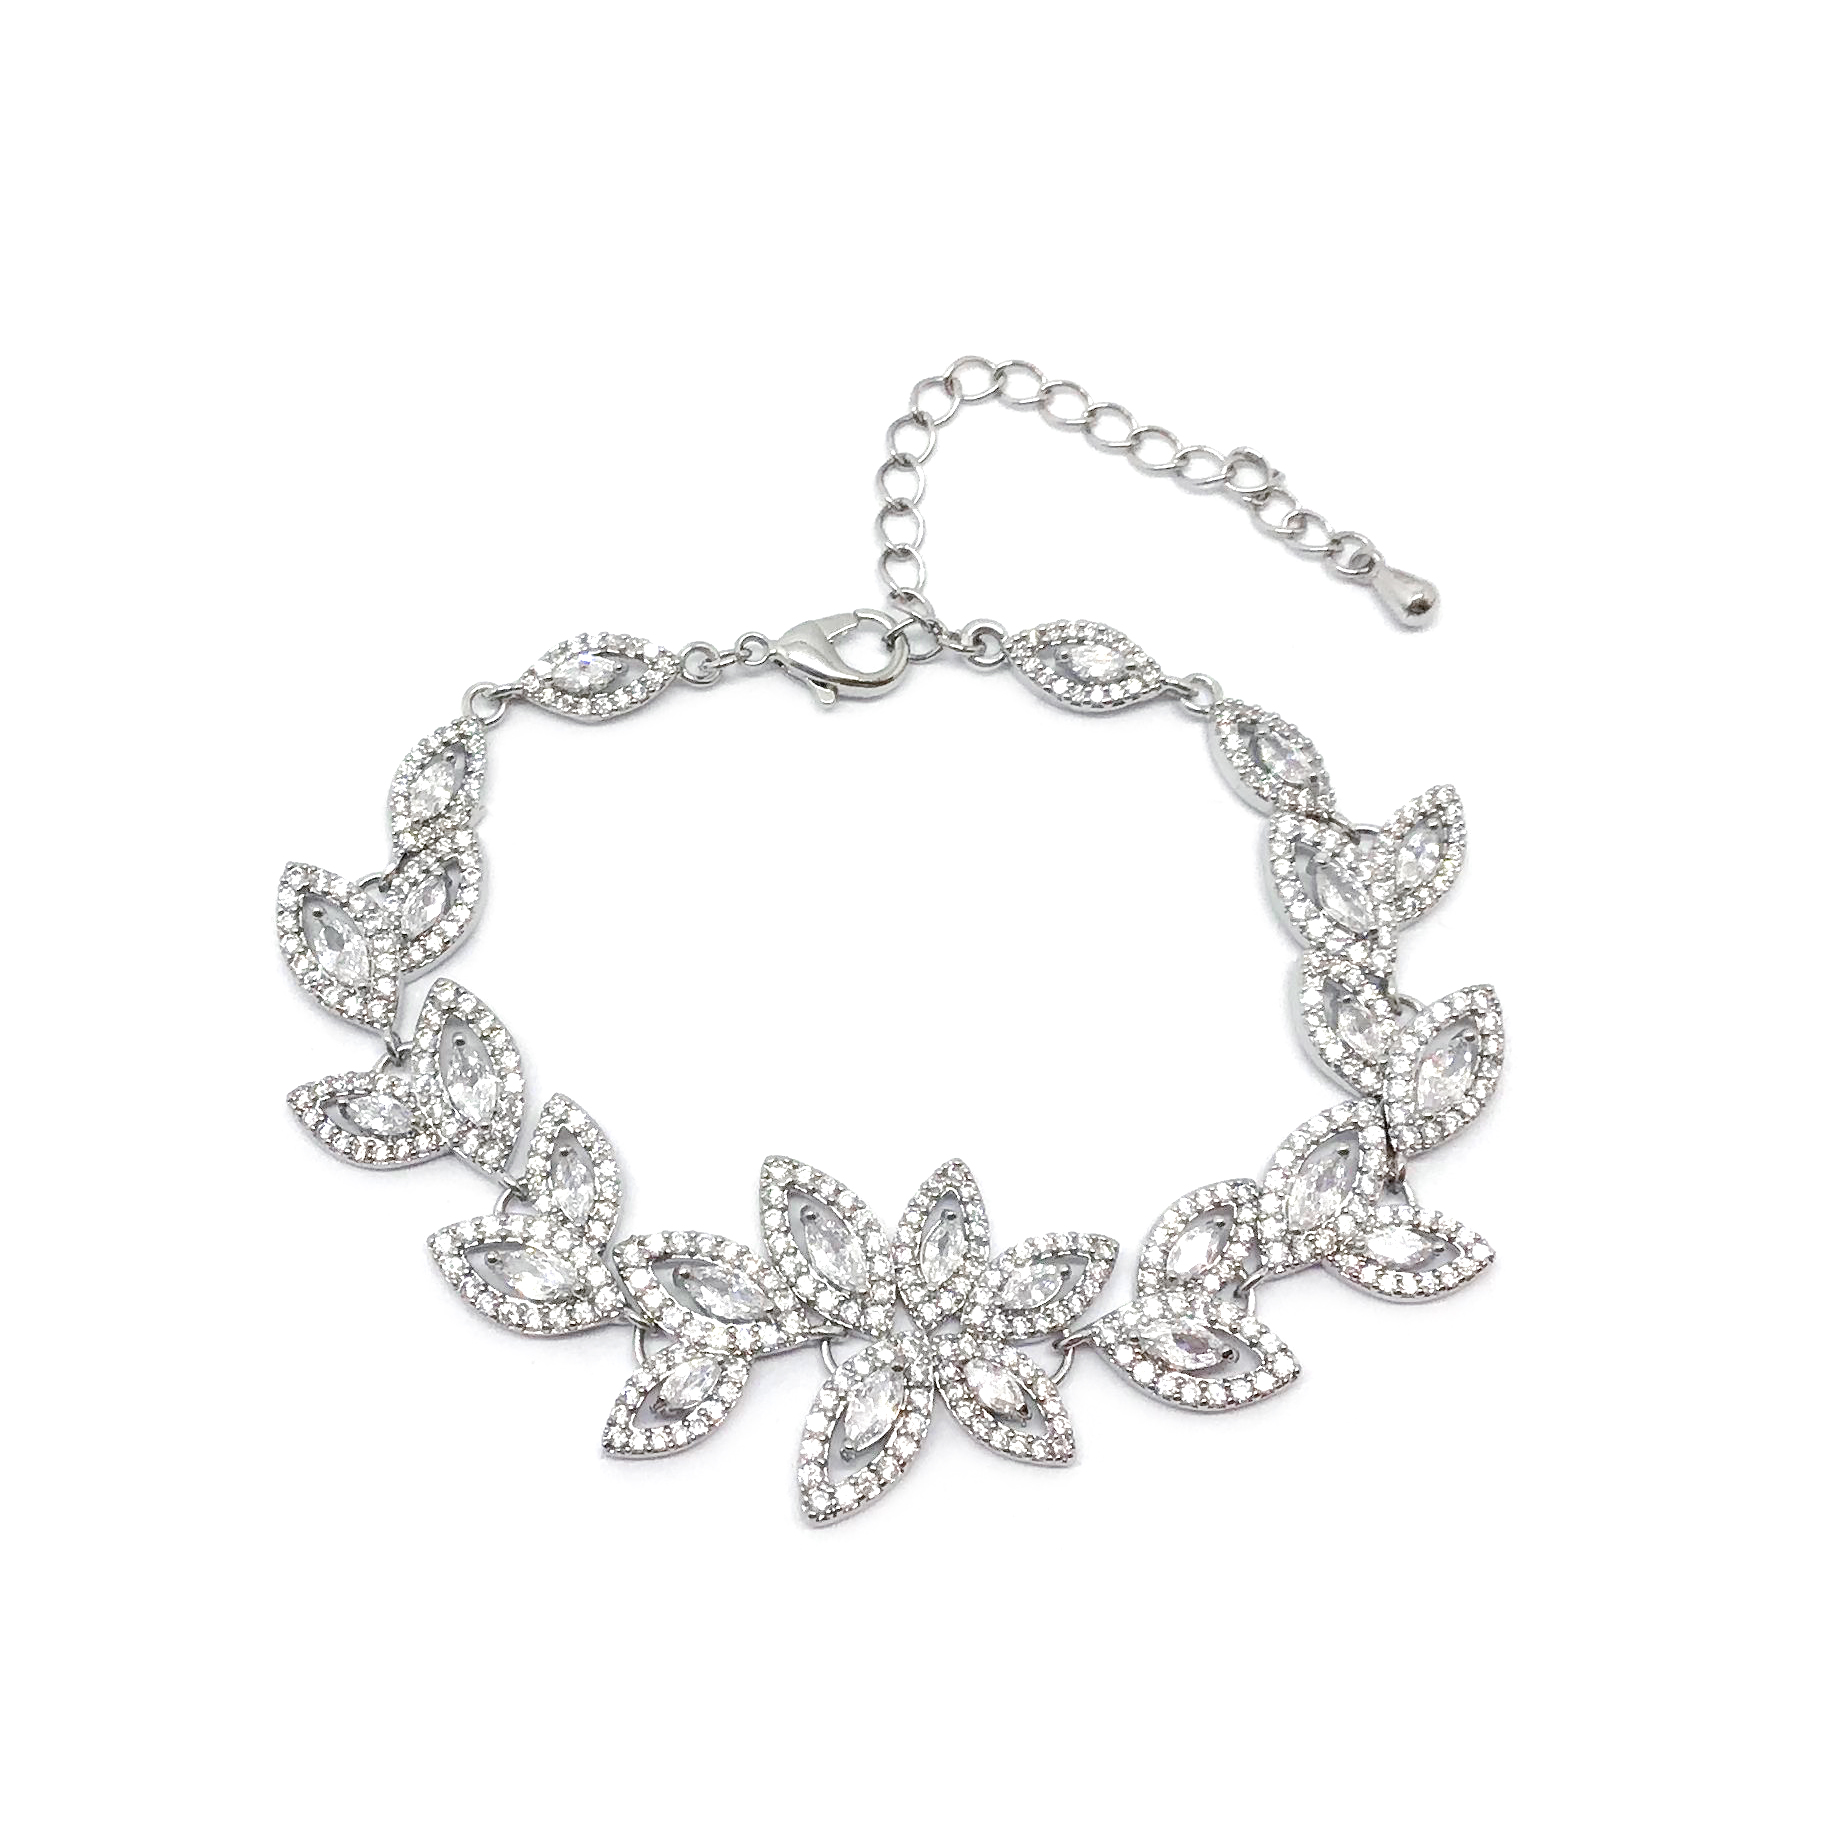 Australian Pacific Necklace, Bracelet and Earrings